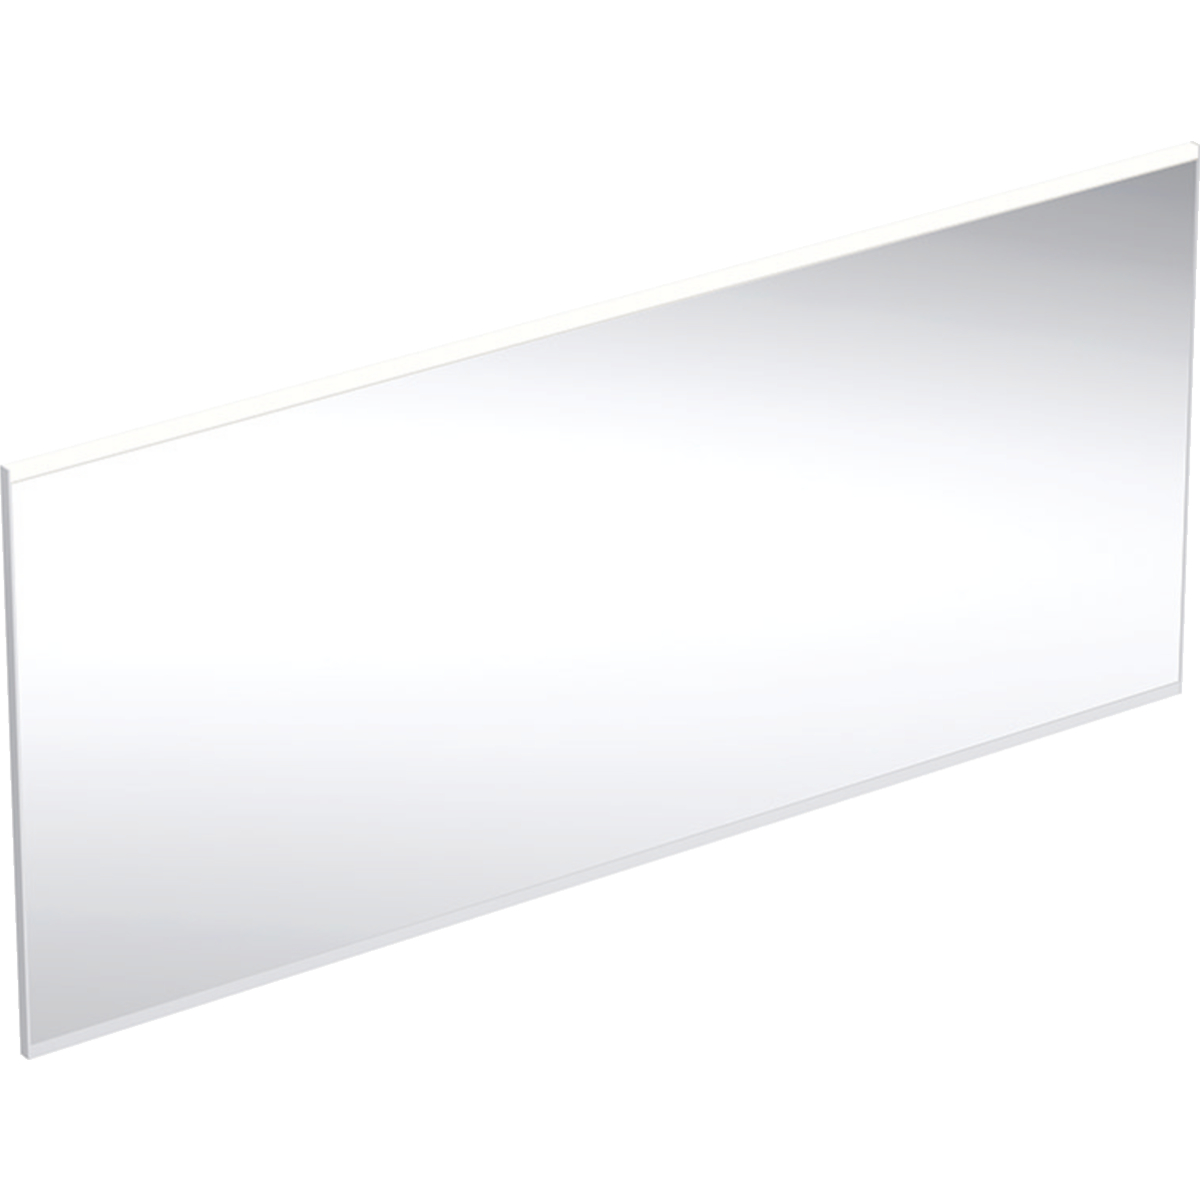 Option Plus Square illuminated mirror with lighting - 1600mm